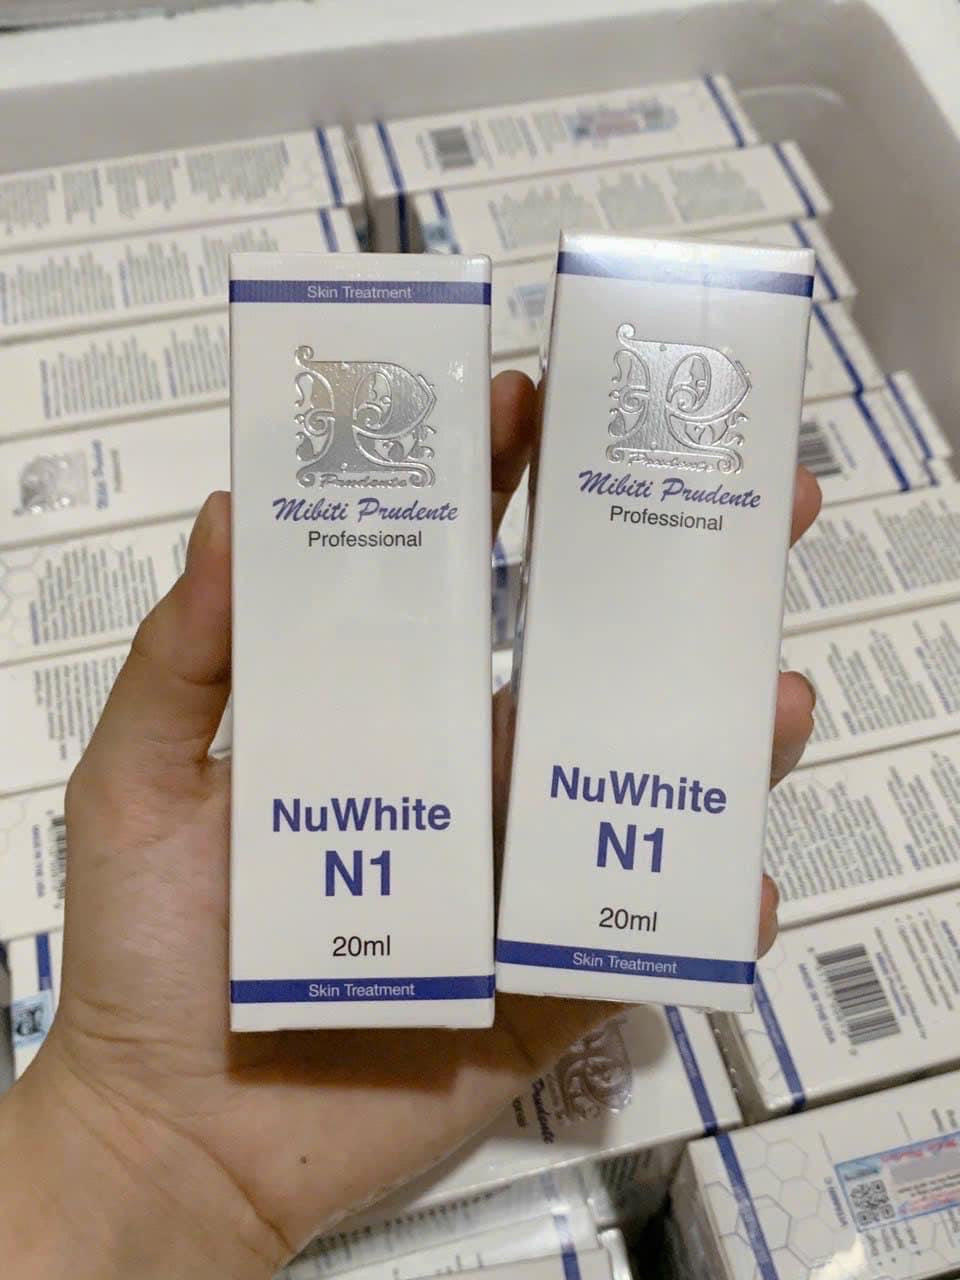 Nuwhite N1 size 20ml